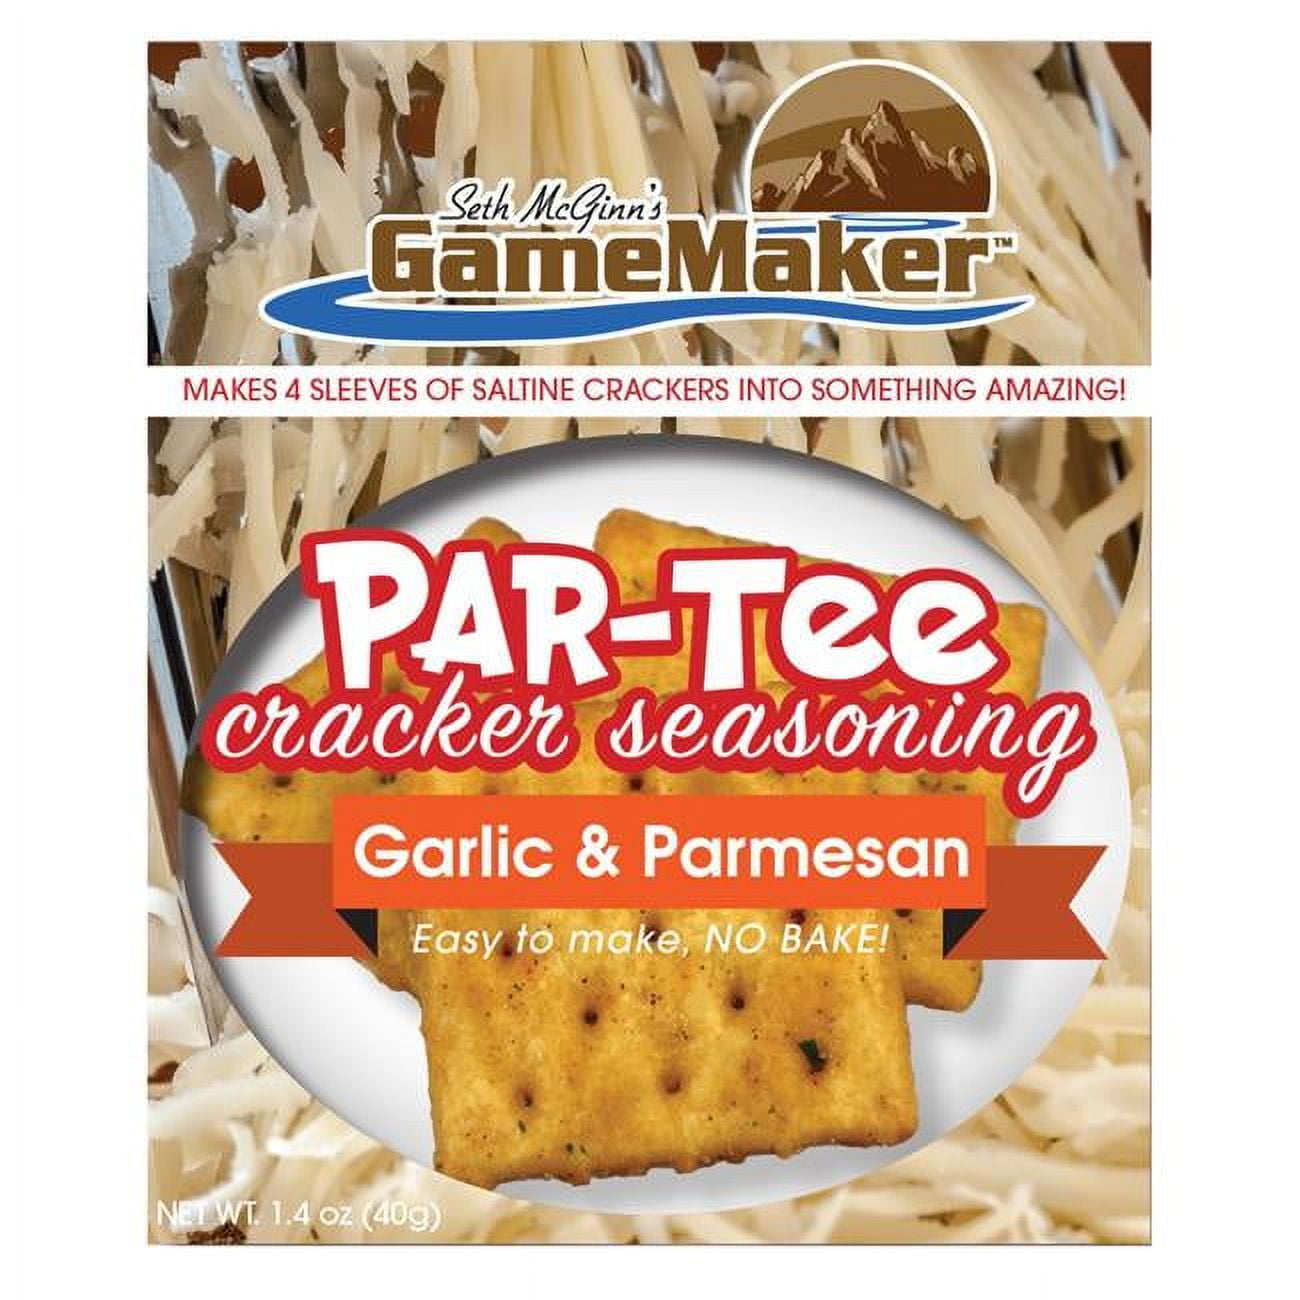 Gp1233 Gamemaker Par-tee, Garlic & Parmesan